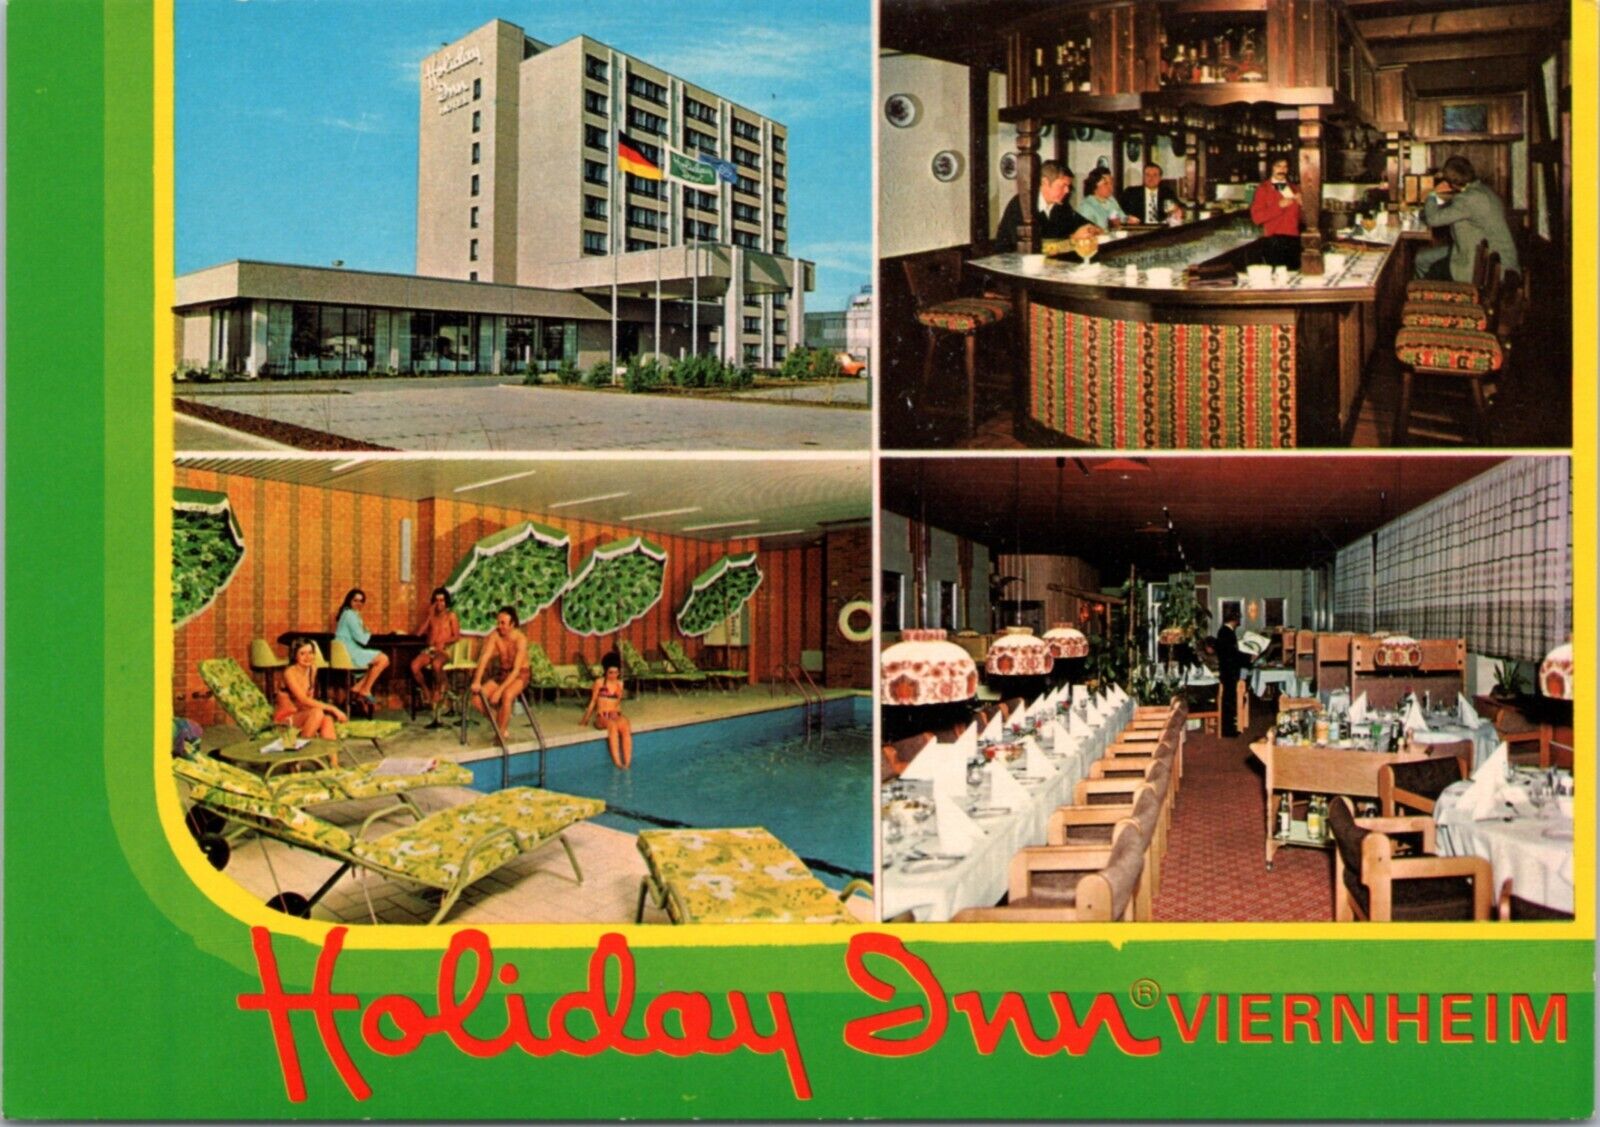 Postcard Germany Viernheim - Holiday Inn